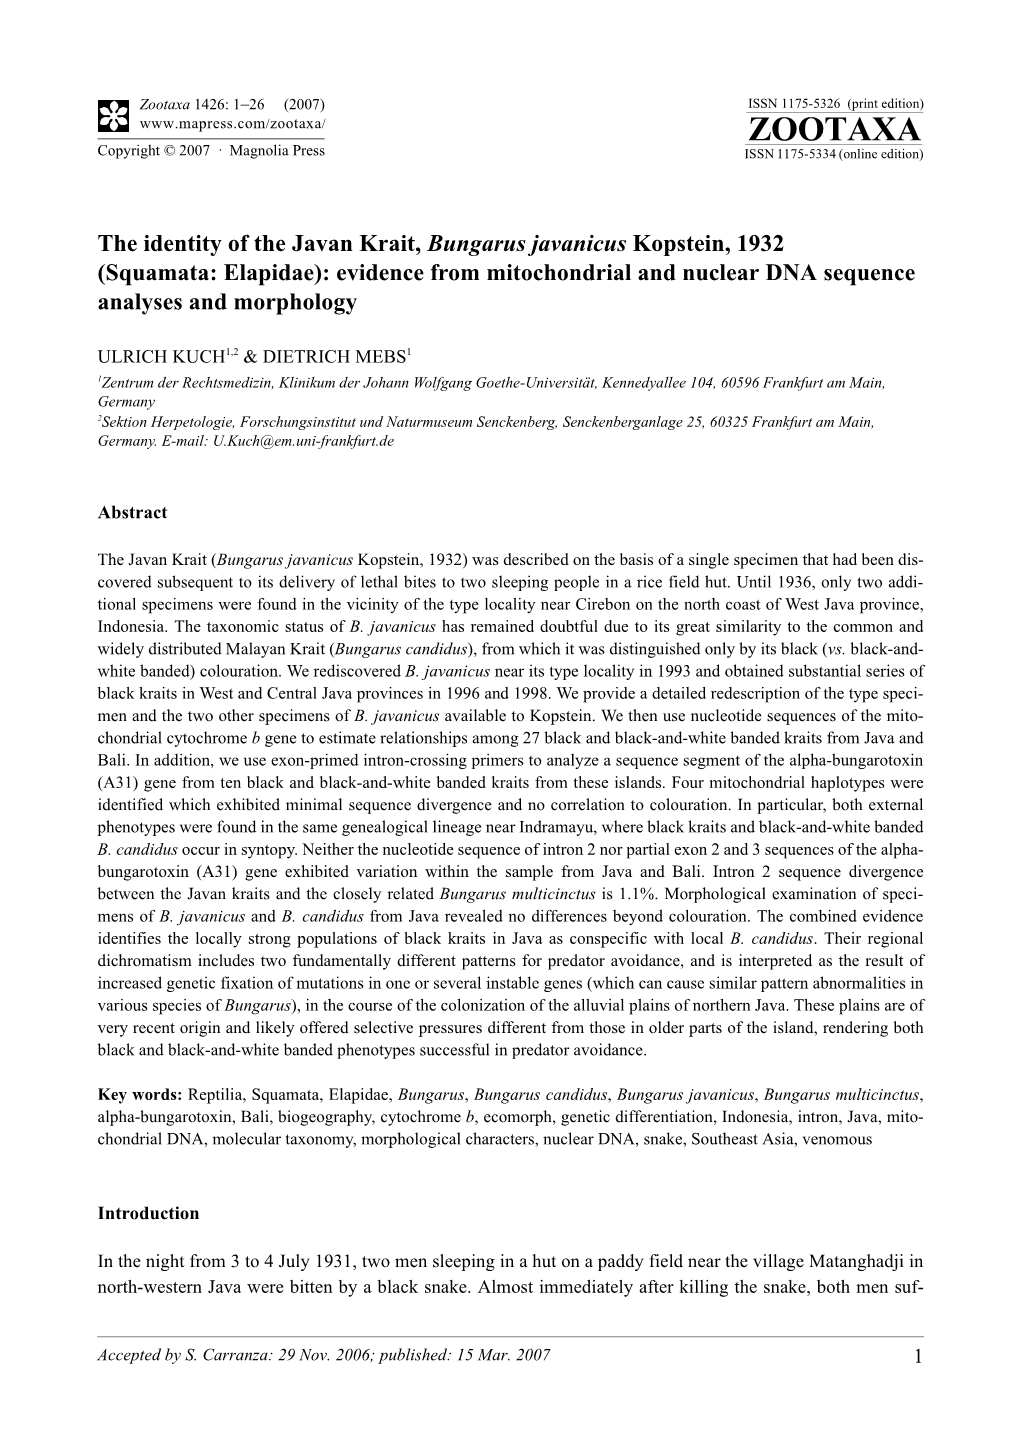 Zootaxa, the Identity of the Javan Krait, Bungarus Javanicus Kopstein